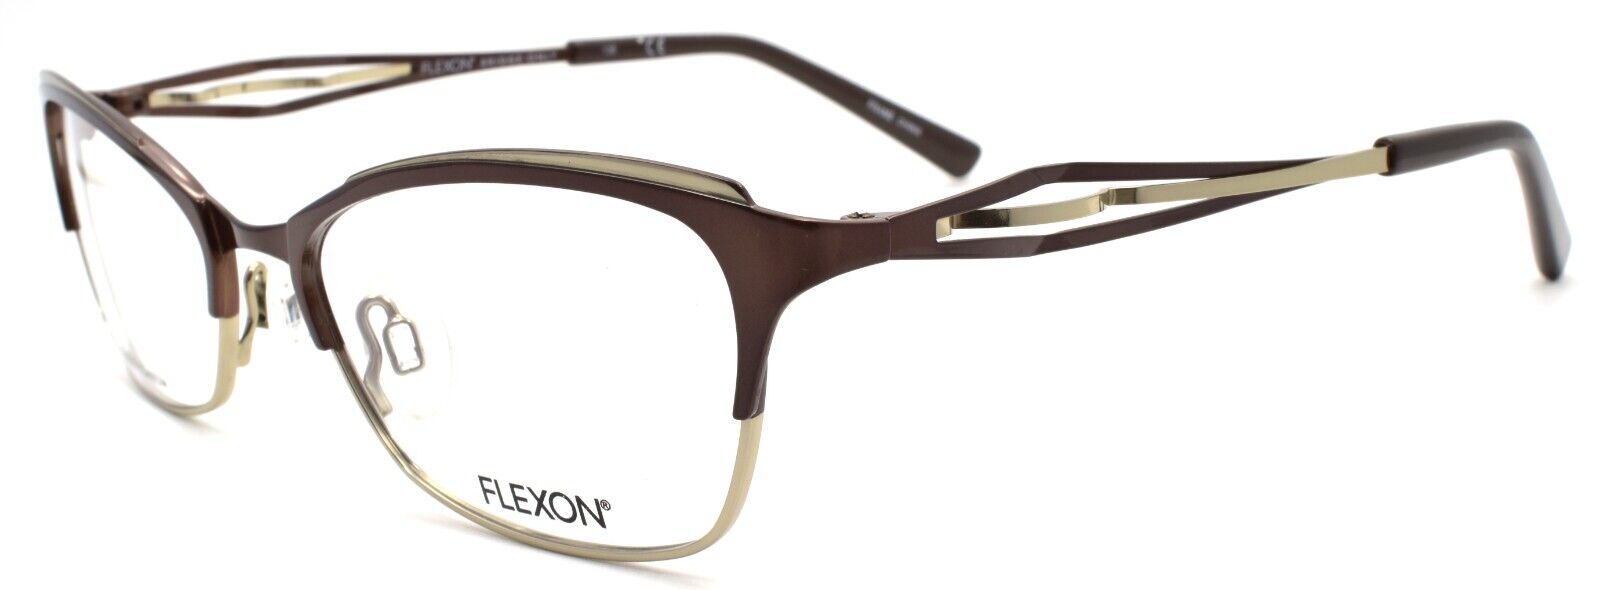 1-Flexon W3000 210 Women's Eyeglasses Frames Brown 51-17-135 Titanium Bridge-883900202824-IKSpecs